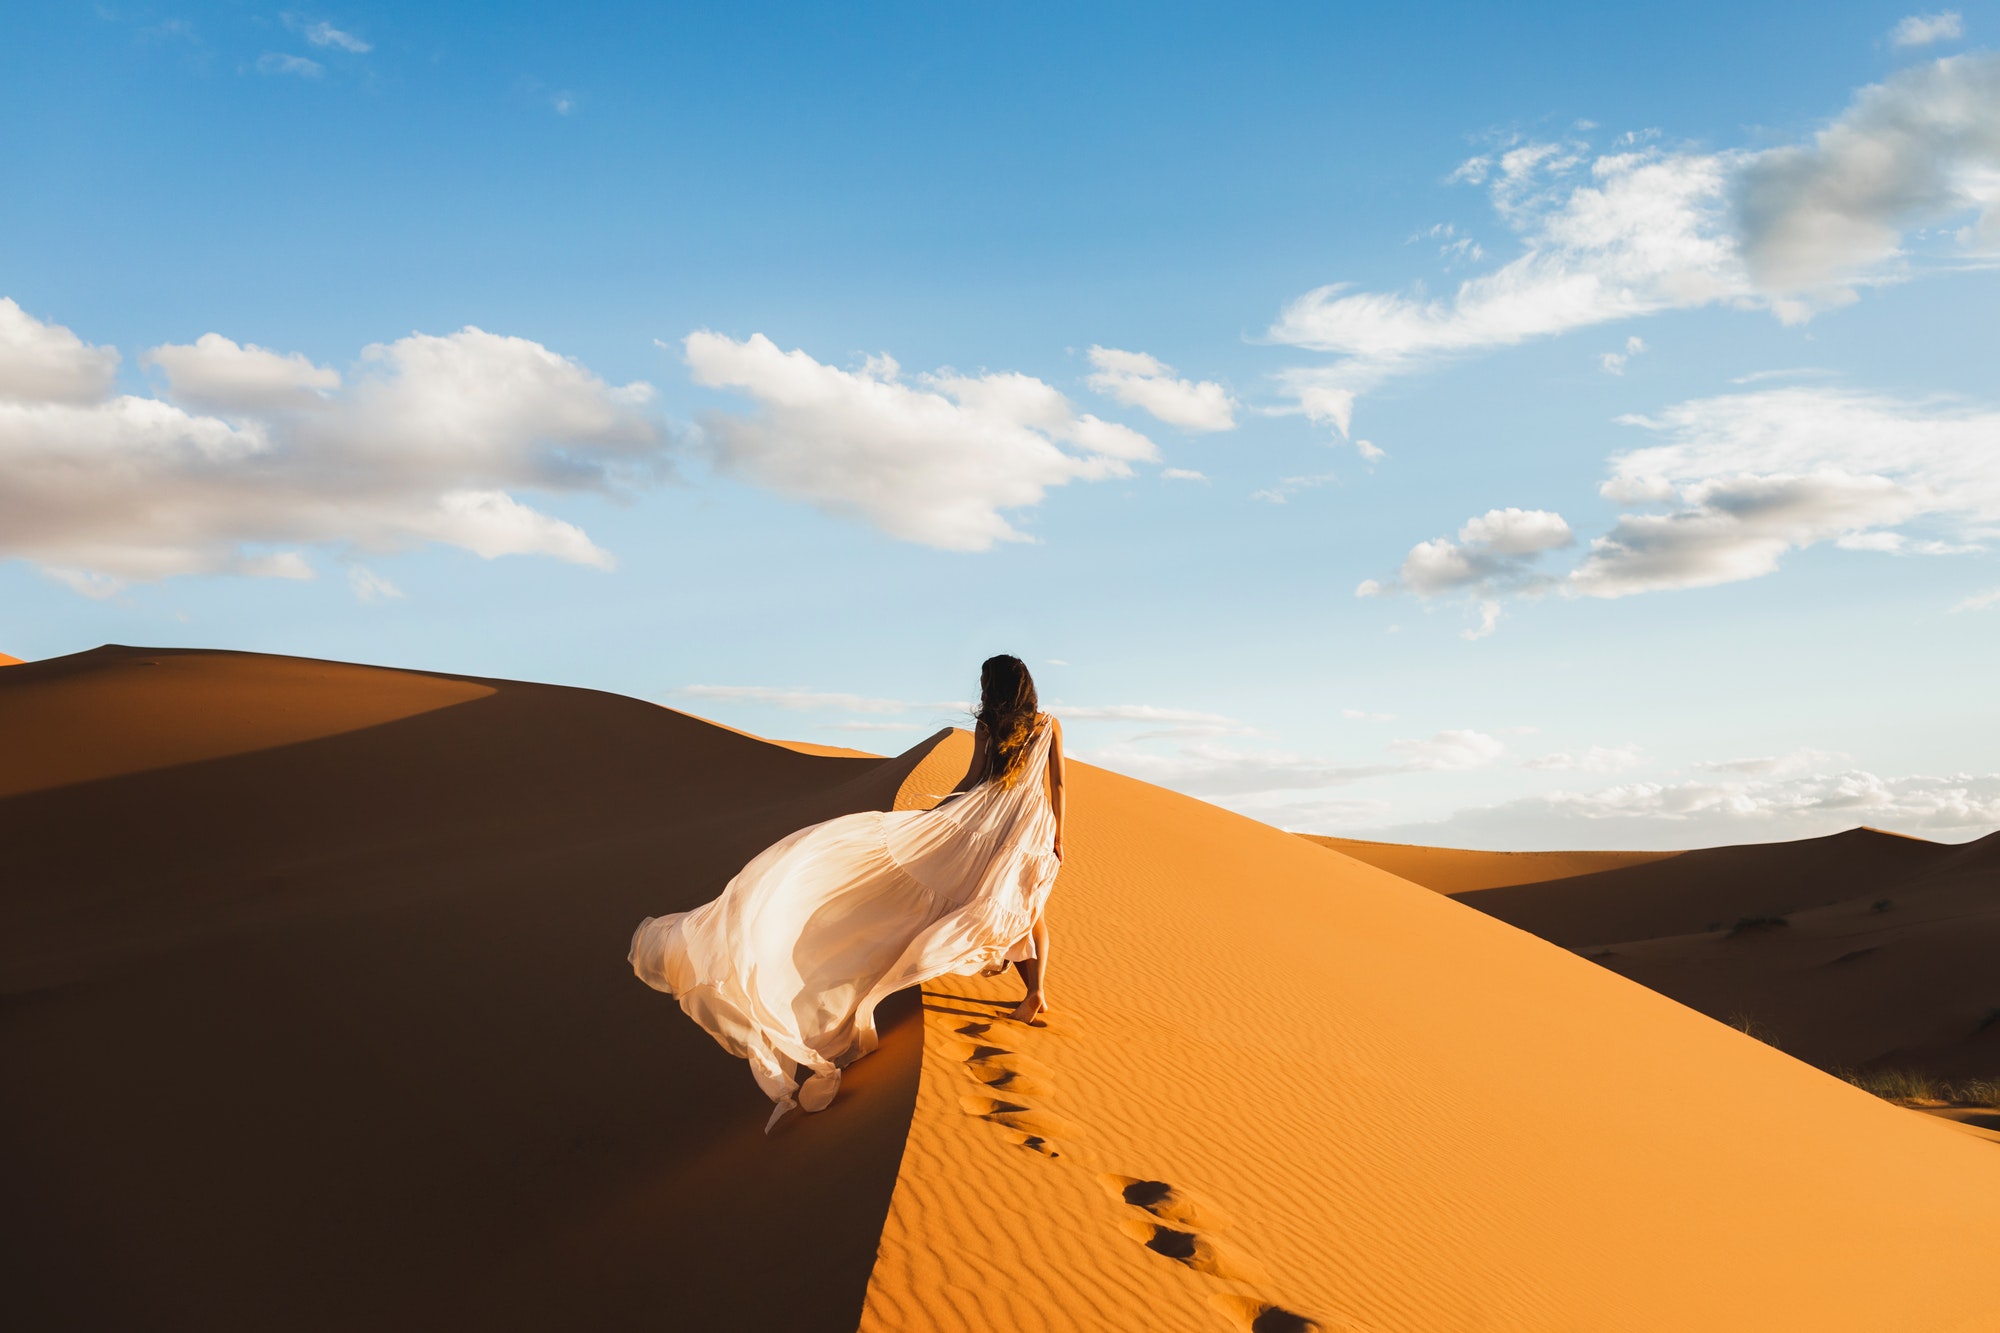 Woman in amazing silk wedding dress with fantastic view of Sahara desert sand dunes in sunset light